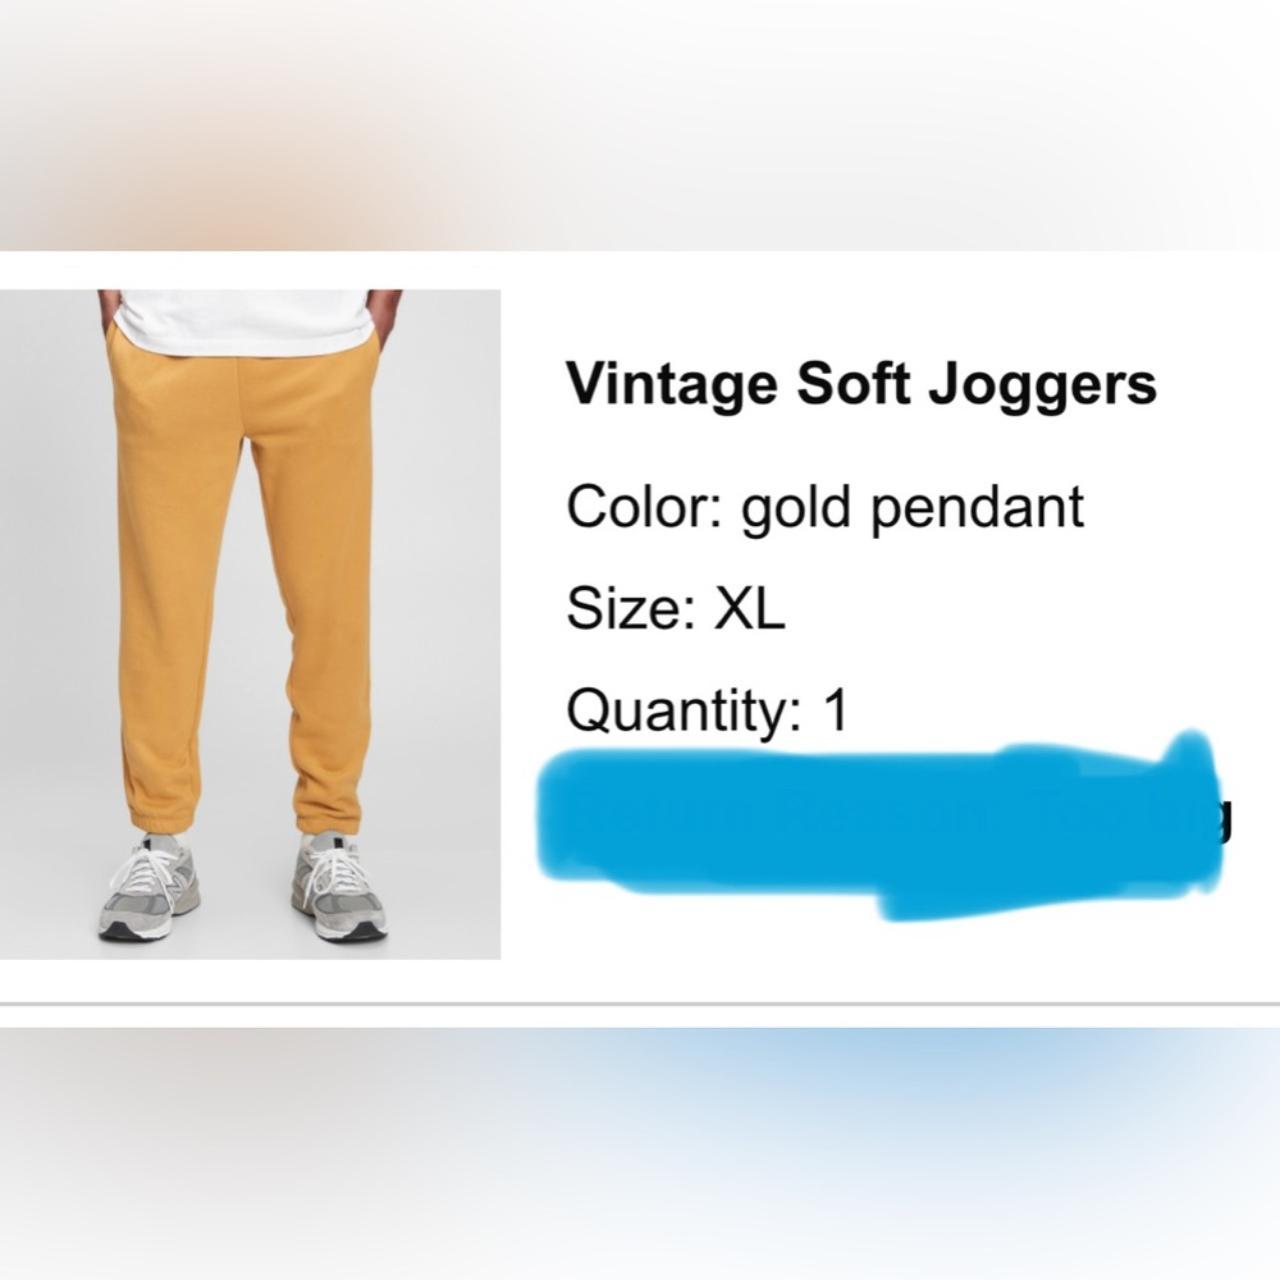 Vintage Soft Joggers